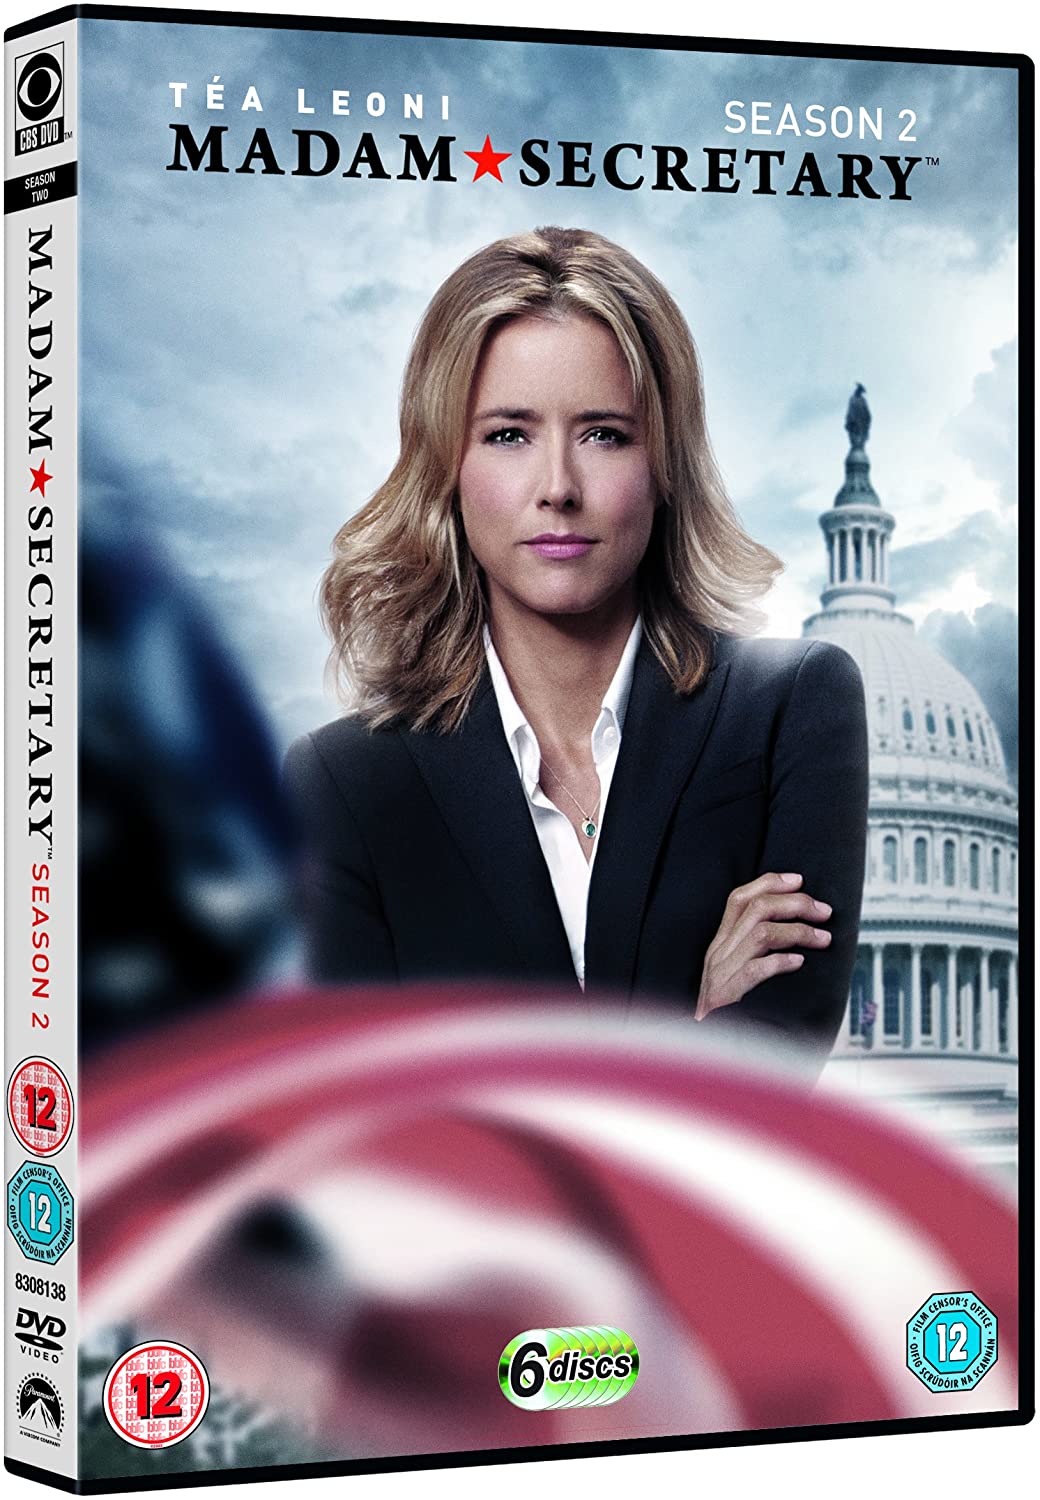 Madam Secretary - Season 2 [2015] - Political drama [DVD]